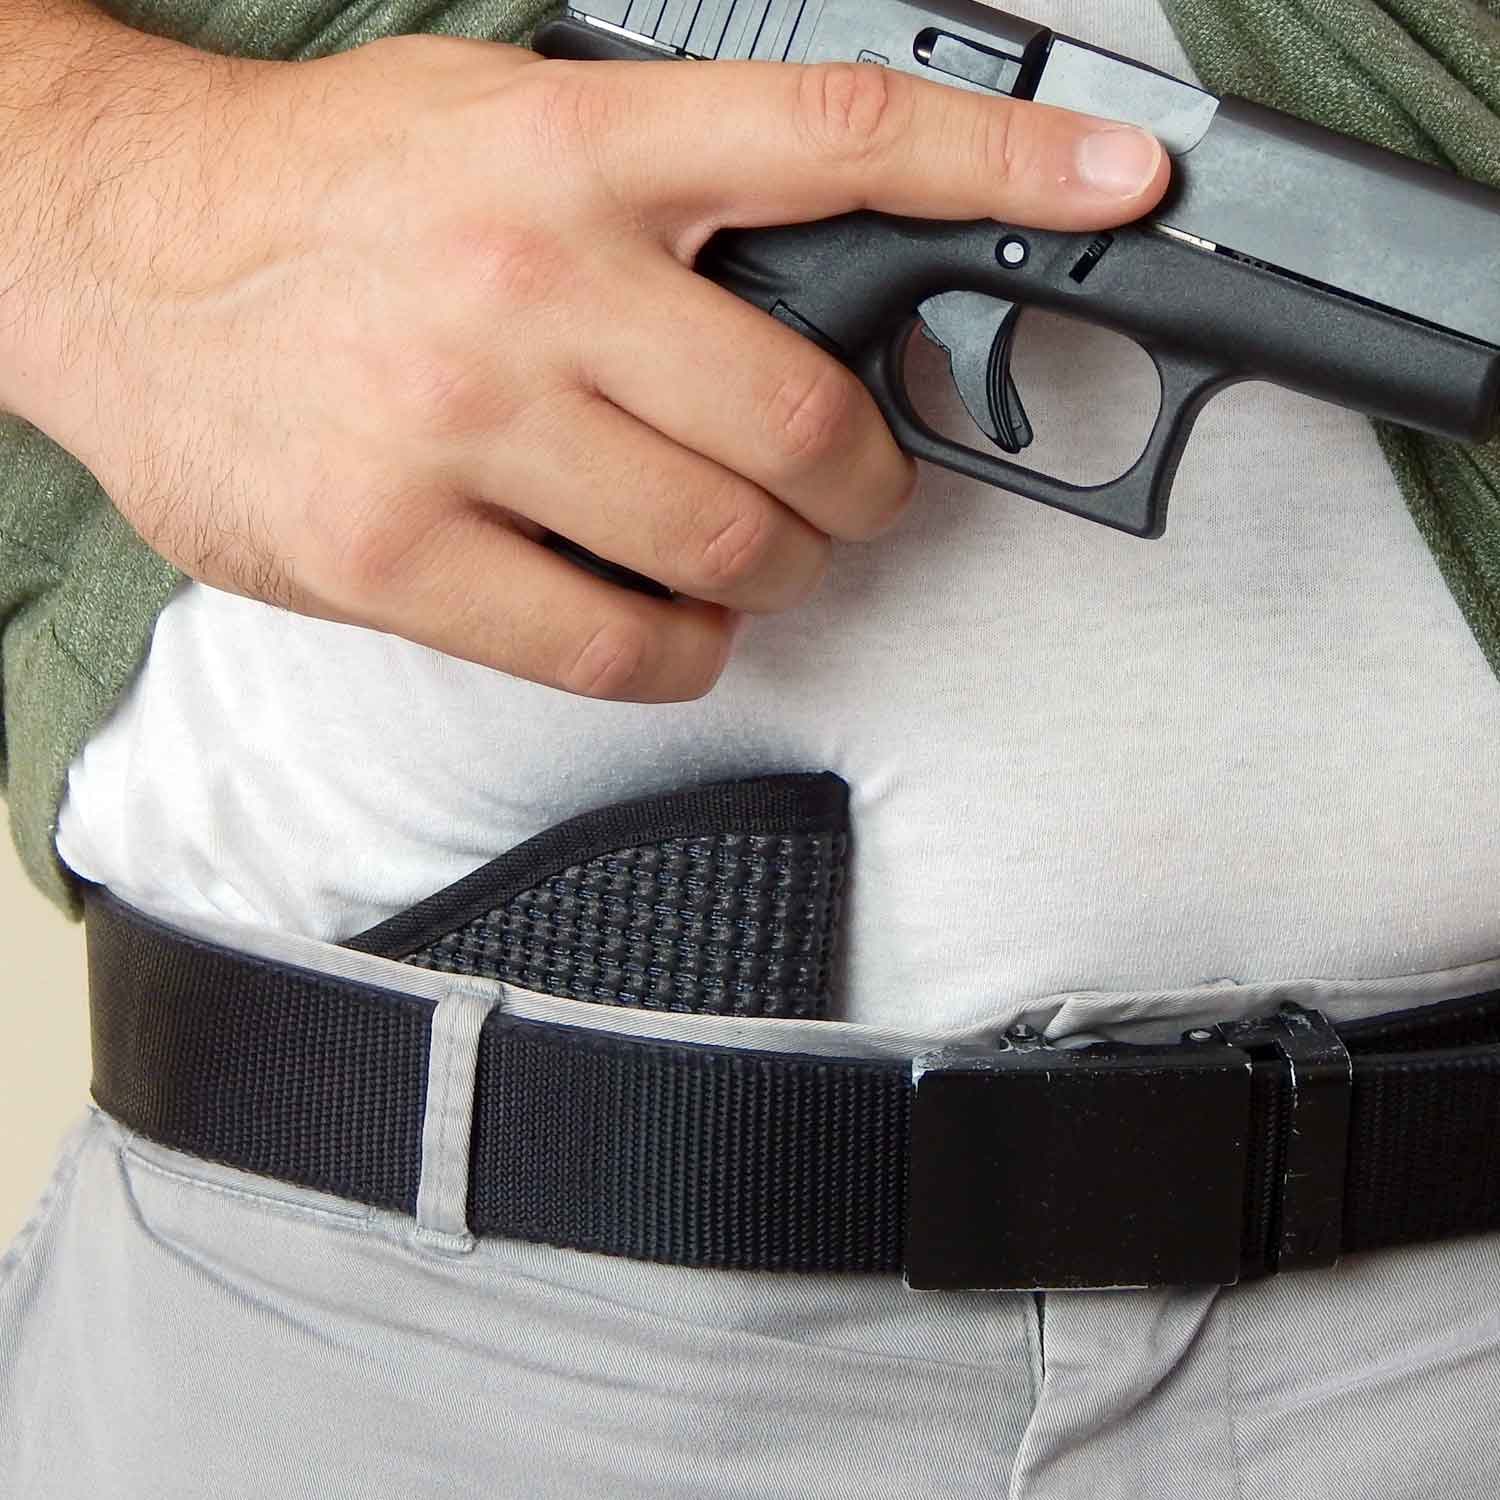 https://activeprogear.com/wp-content/uploads/2018/07/iwb-pocket-concealed-carry-gun-holster-sig-p365-glock-g43-g26-g19-smith-wesson-shield-9.jpg